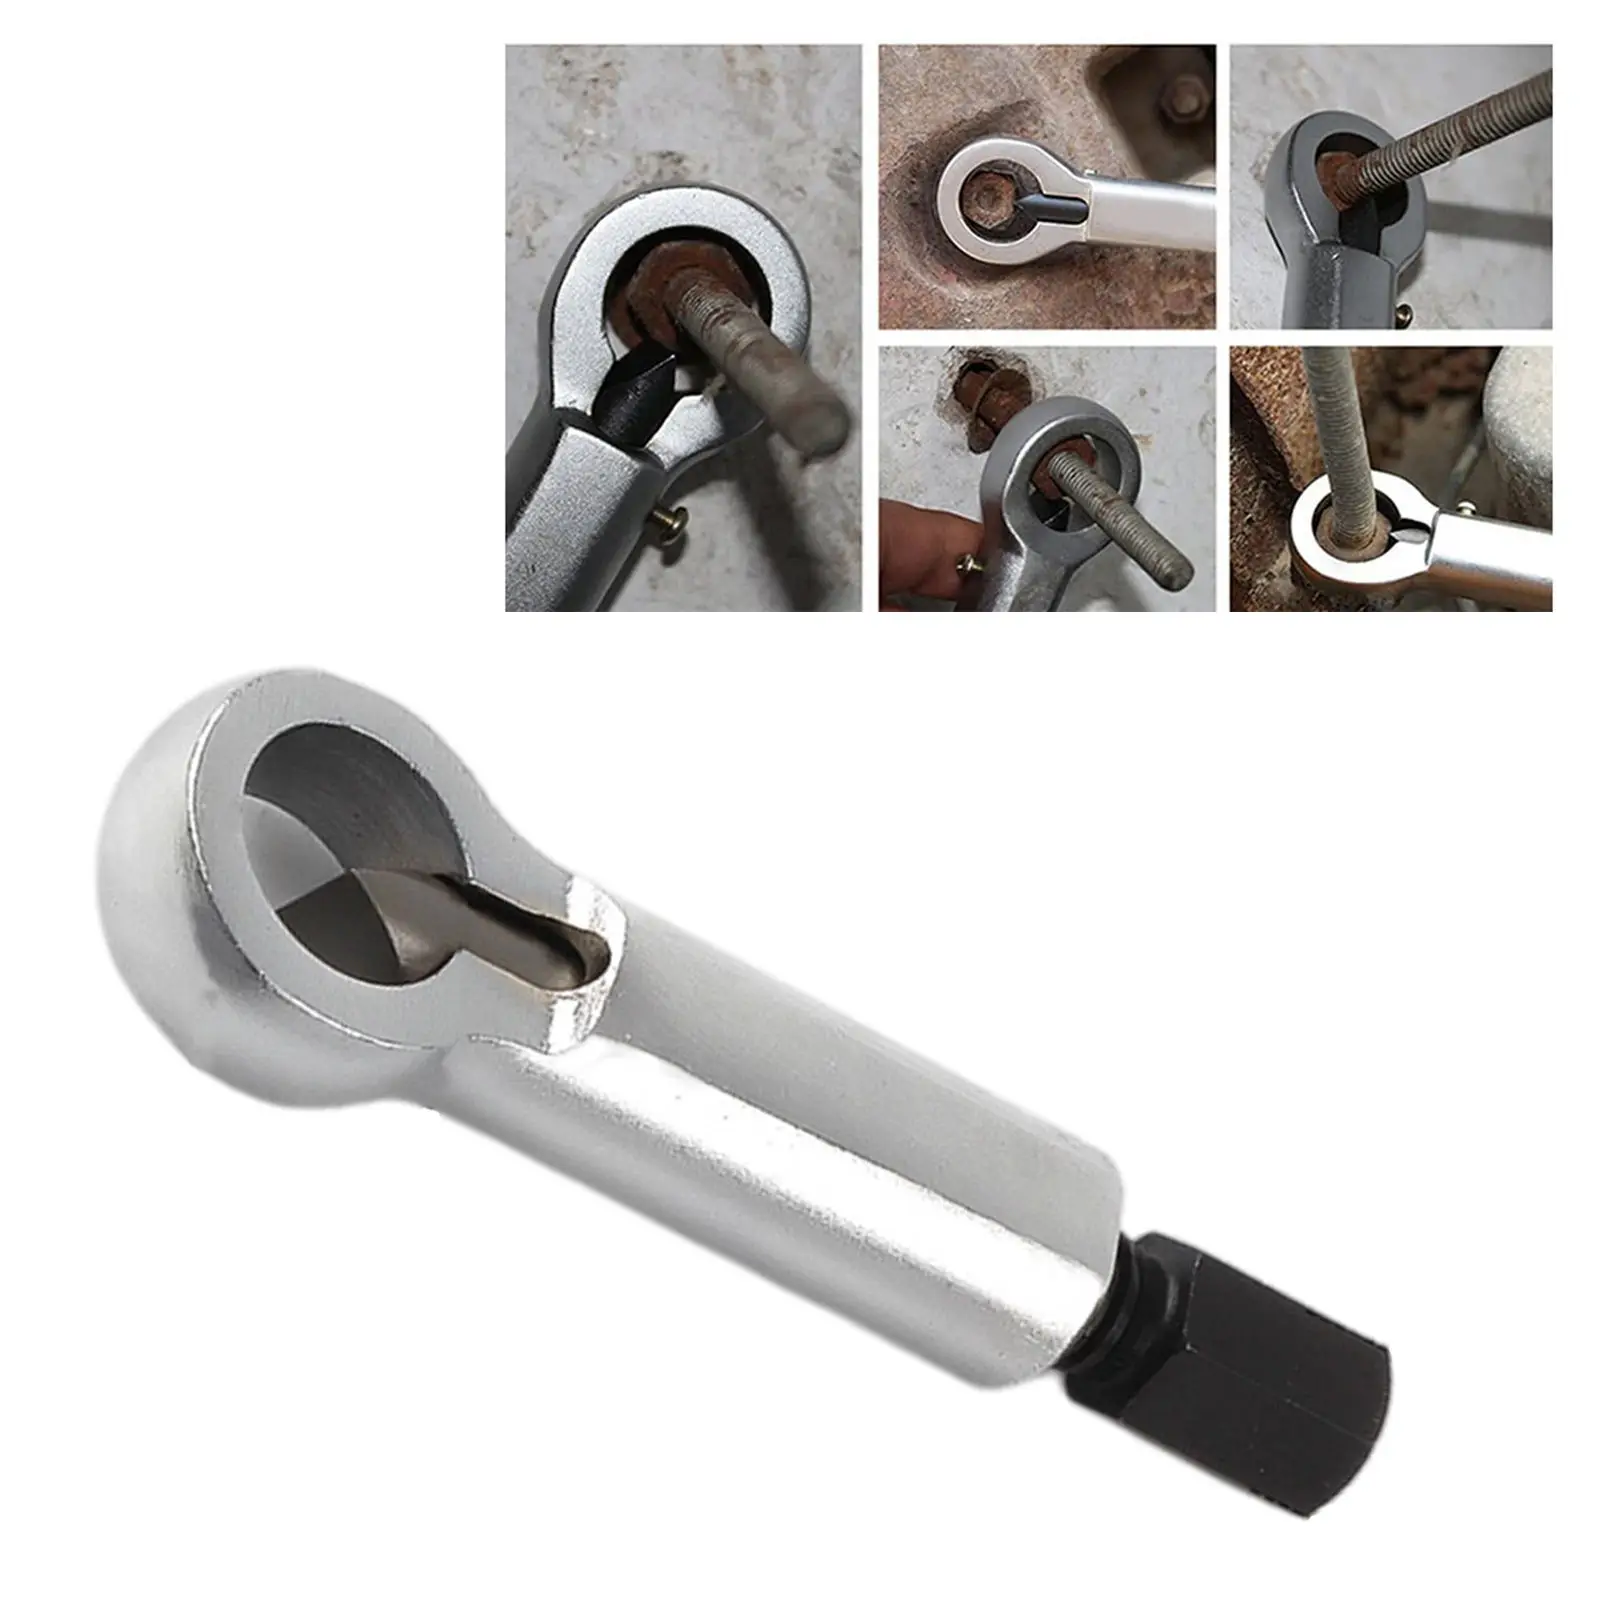 Bearing Steel Adjustable Stuck Nuts Splitter Broken Damaged Corroded Rusted Nut Breaker Remover Hand Separation Tool